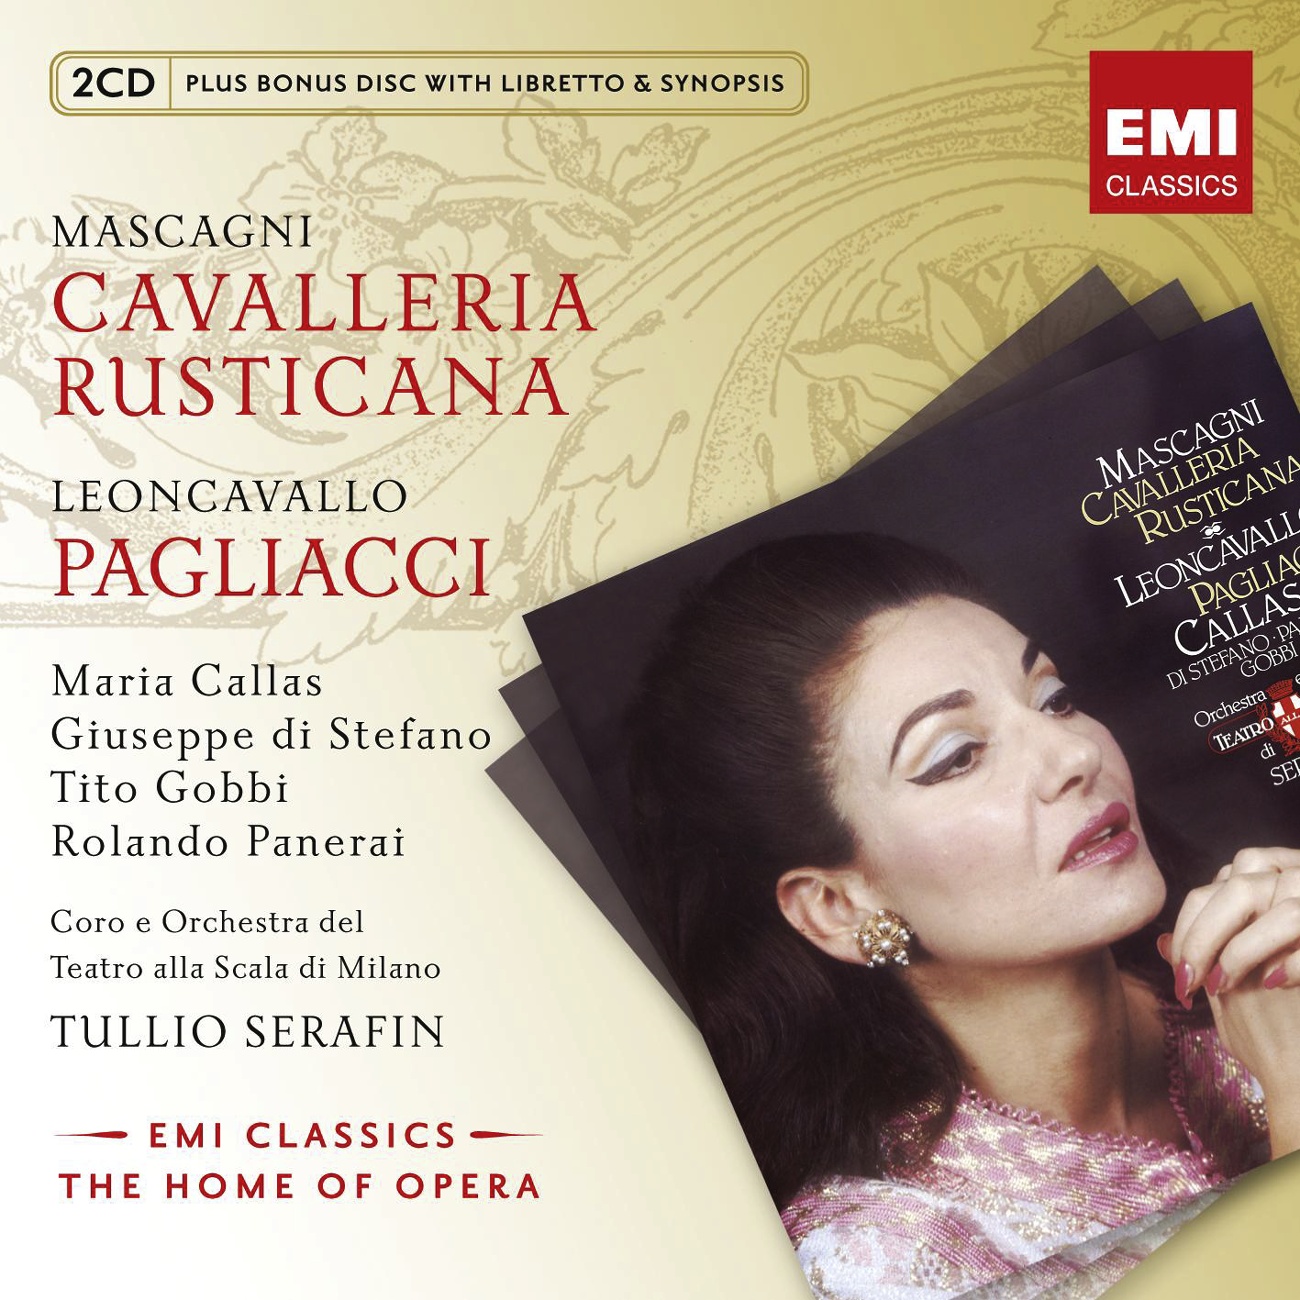 Cavalleria Rusticana (1997 Digital Remaster): Preludio - conclusion (Orchestra)